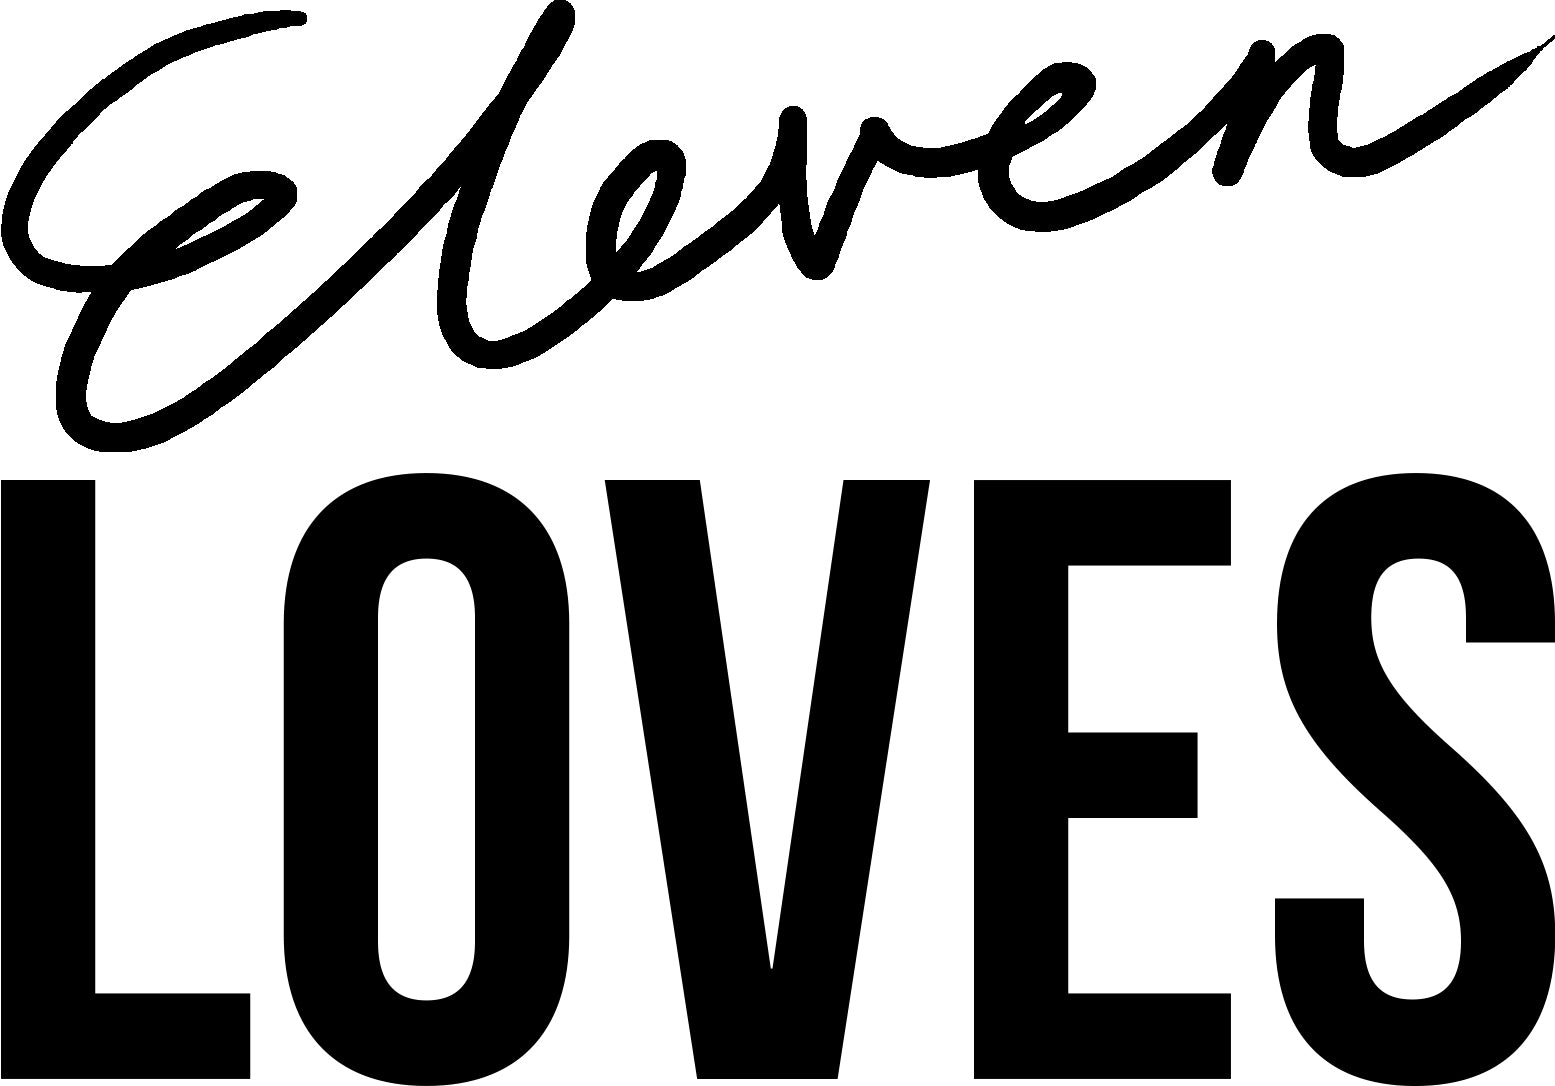 Eleven Loves